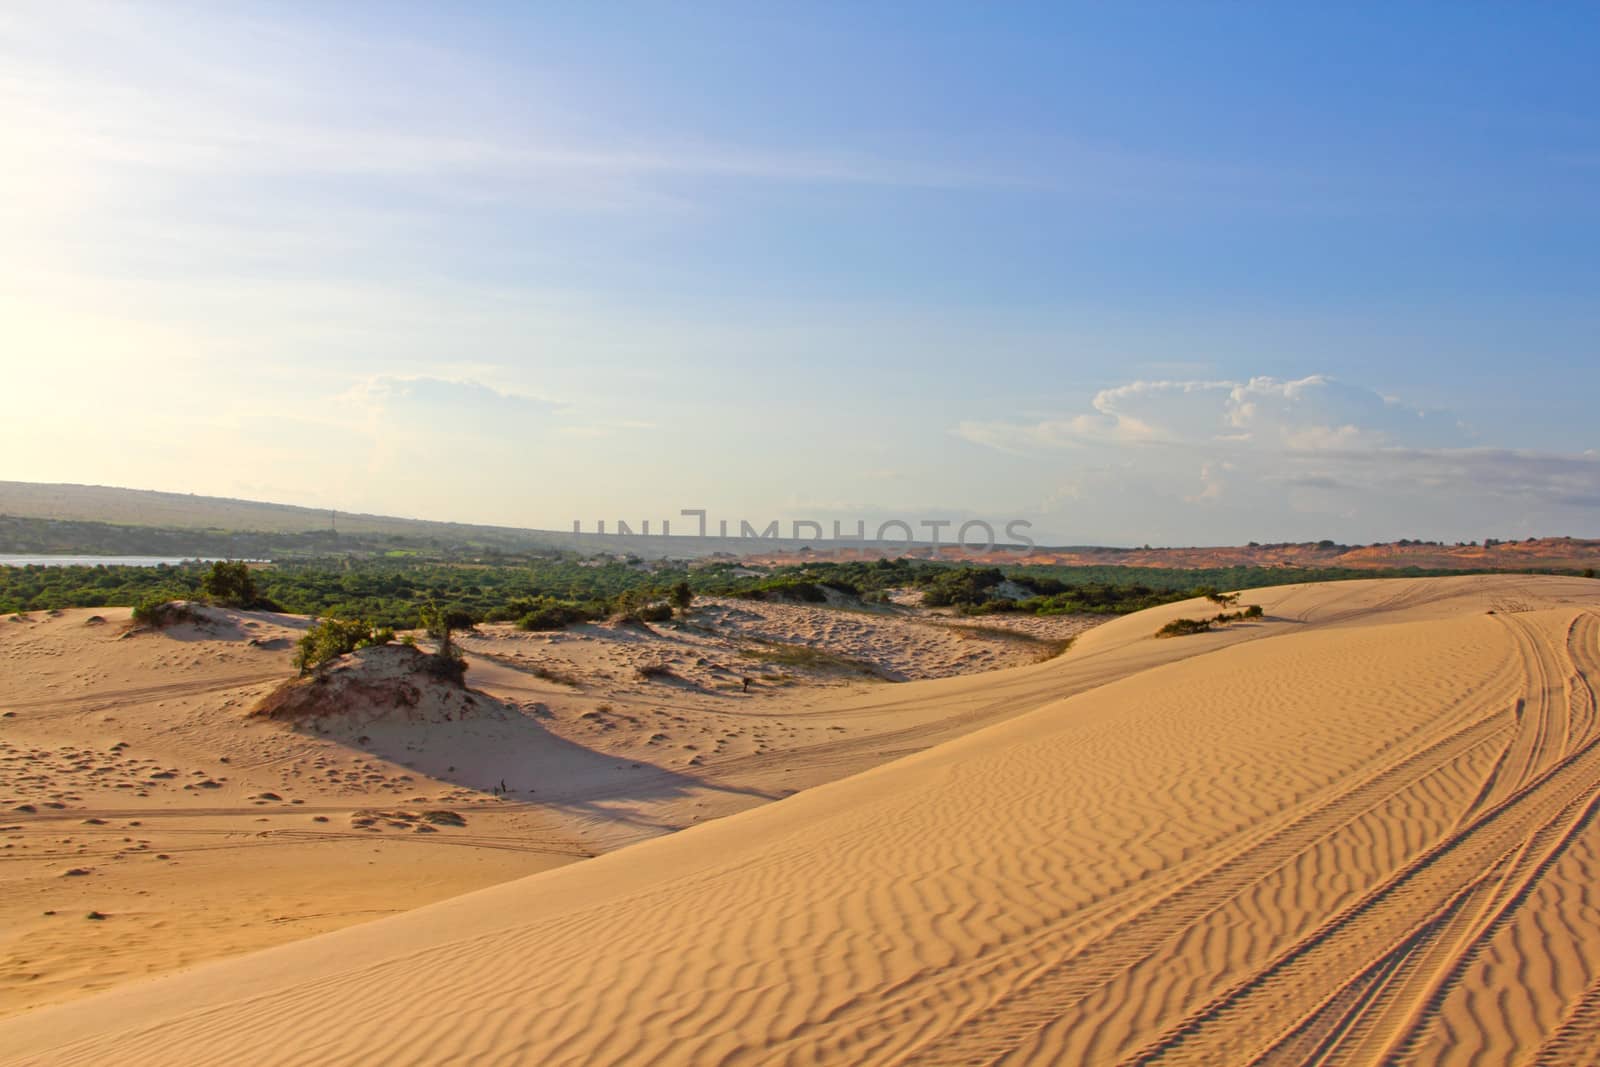 Sand desert landscape under bluy sky at sunny day